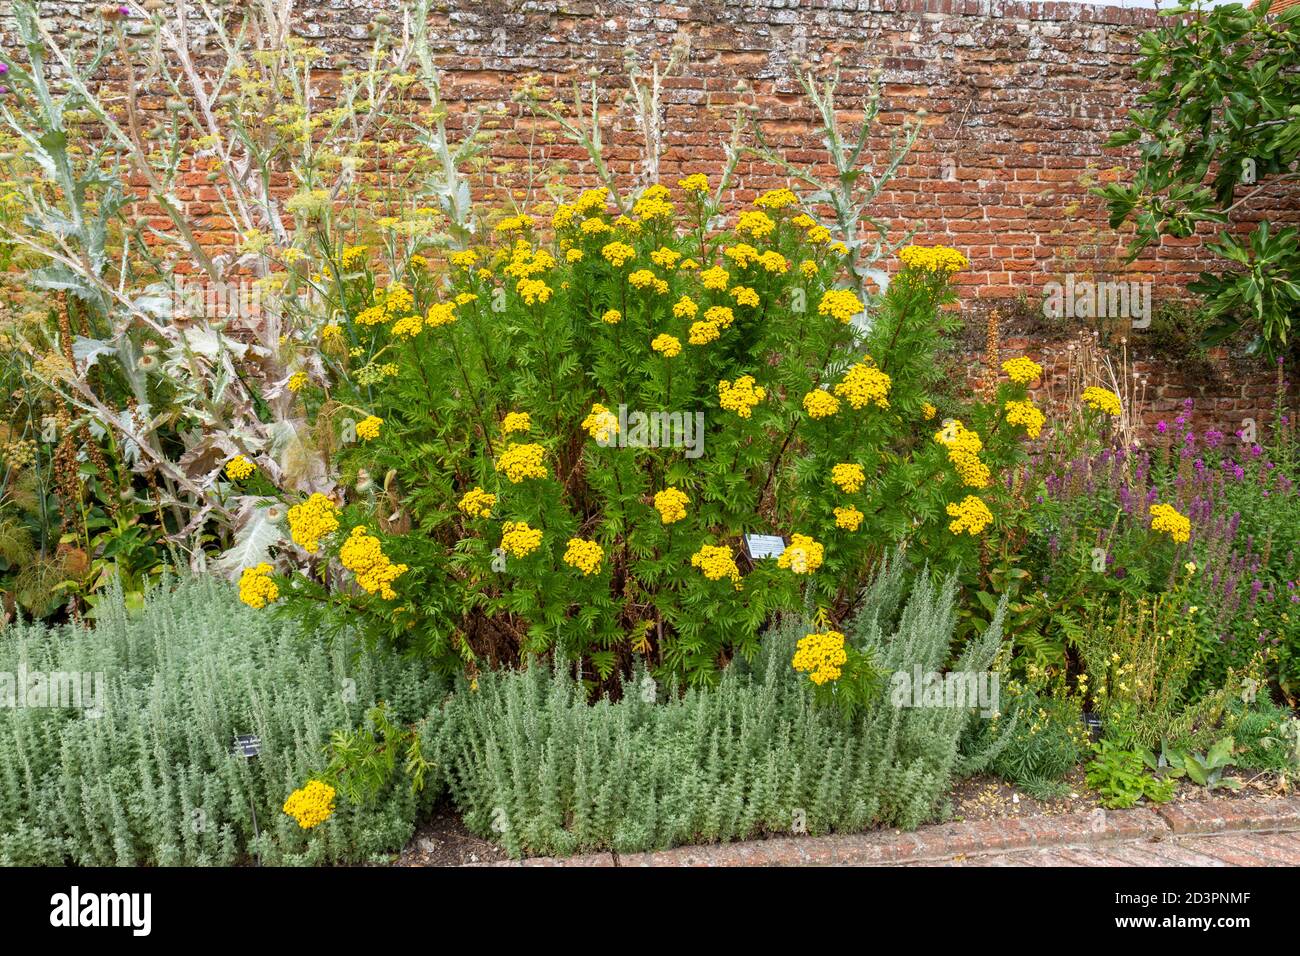 Tansy (Tanacetum vulgare) ist eine mehrjährige, krautige Blütenpflanze im Tudor Walled Garden, Cressing Temple Barns, Essex, UK. Stockfoto